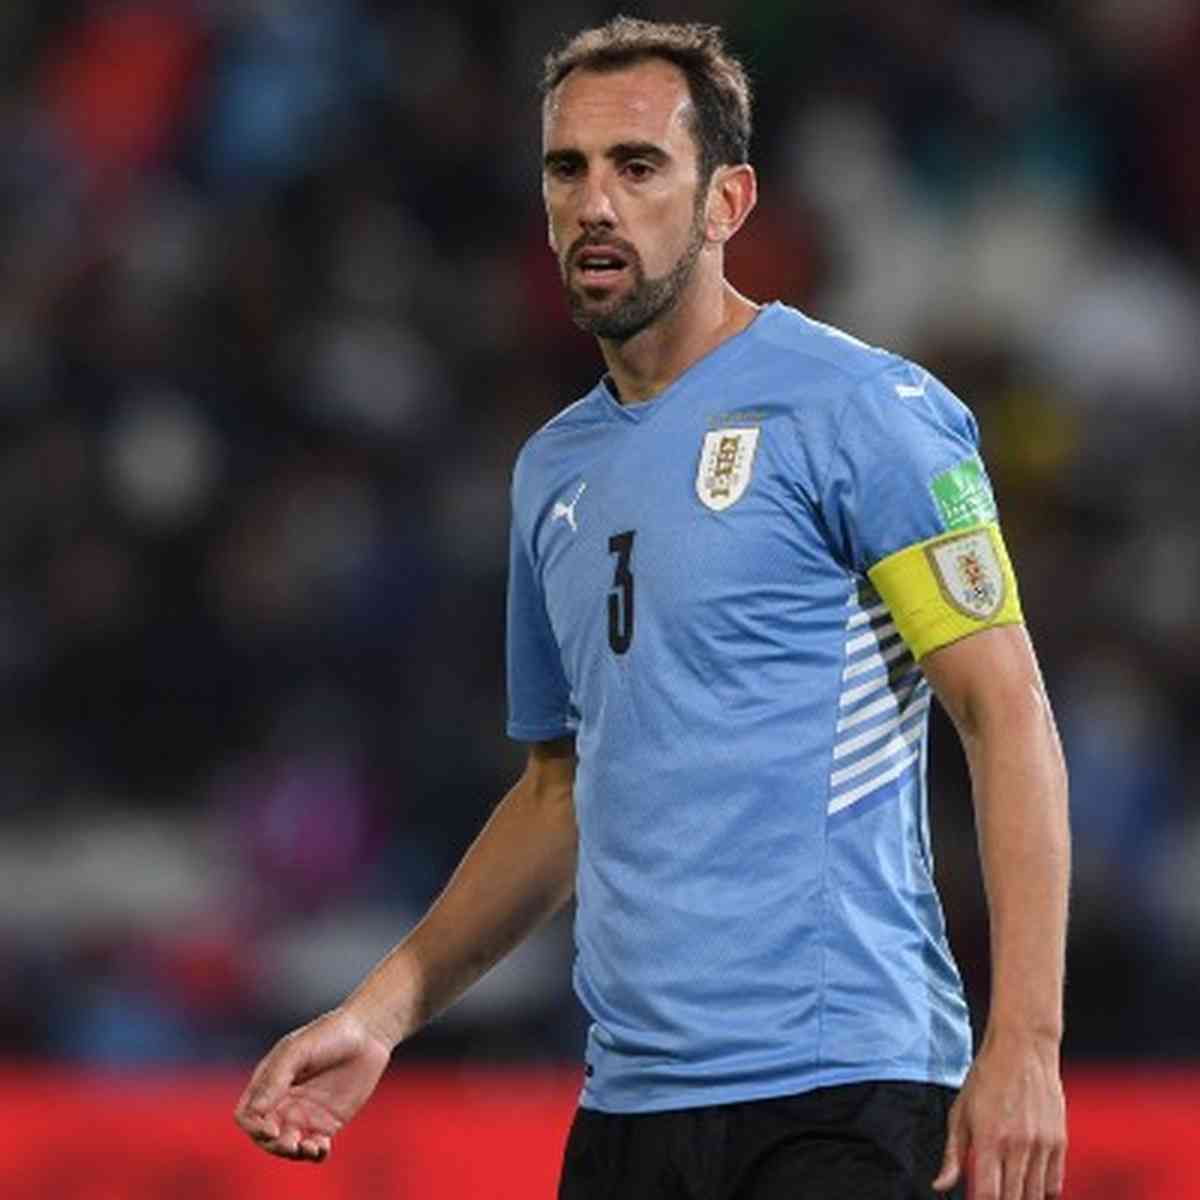 Os 26 convocados do Uruguai na Copa do Mundo 2022: lista completa